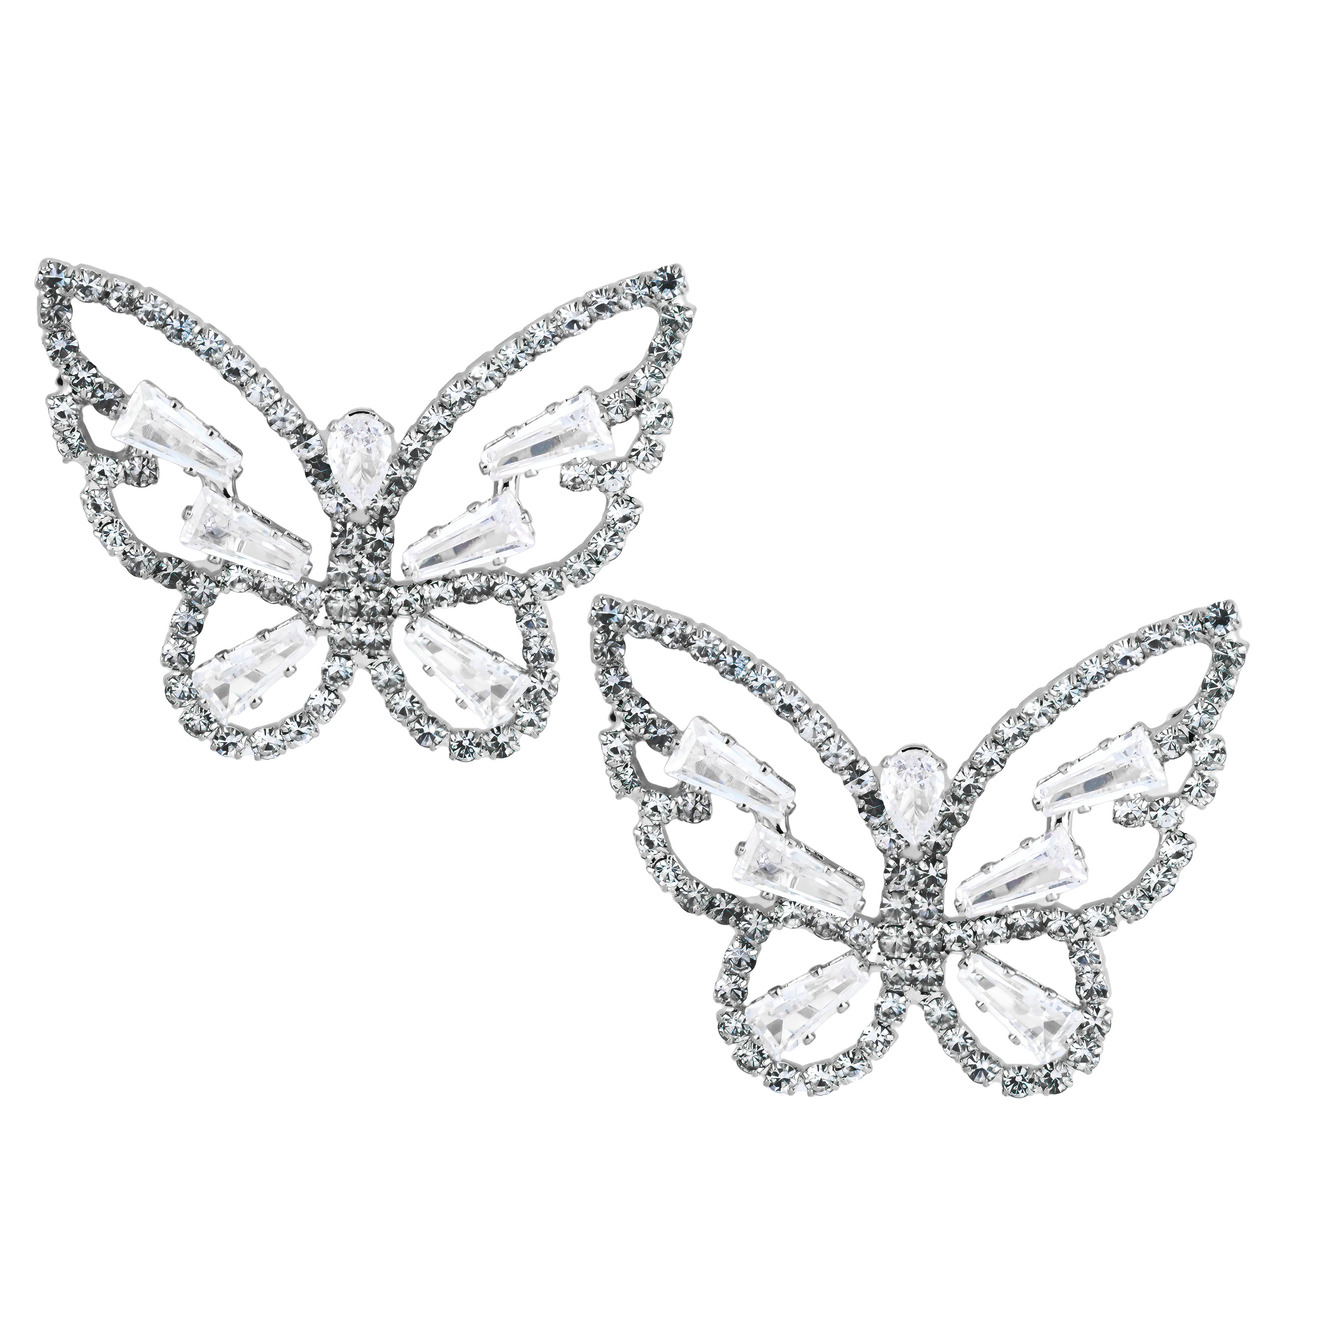 Herald Percy Серебристые серьги-бабочки с кристаллами herald percy серебристые серьги звезды с кристаллами